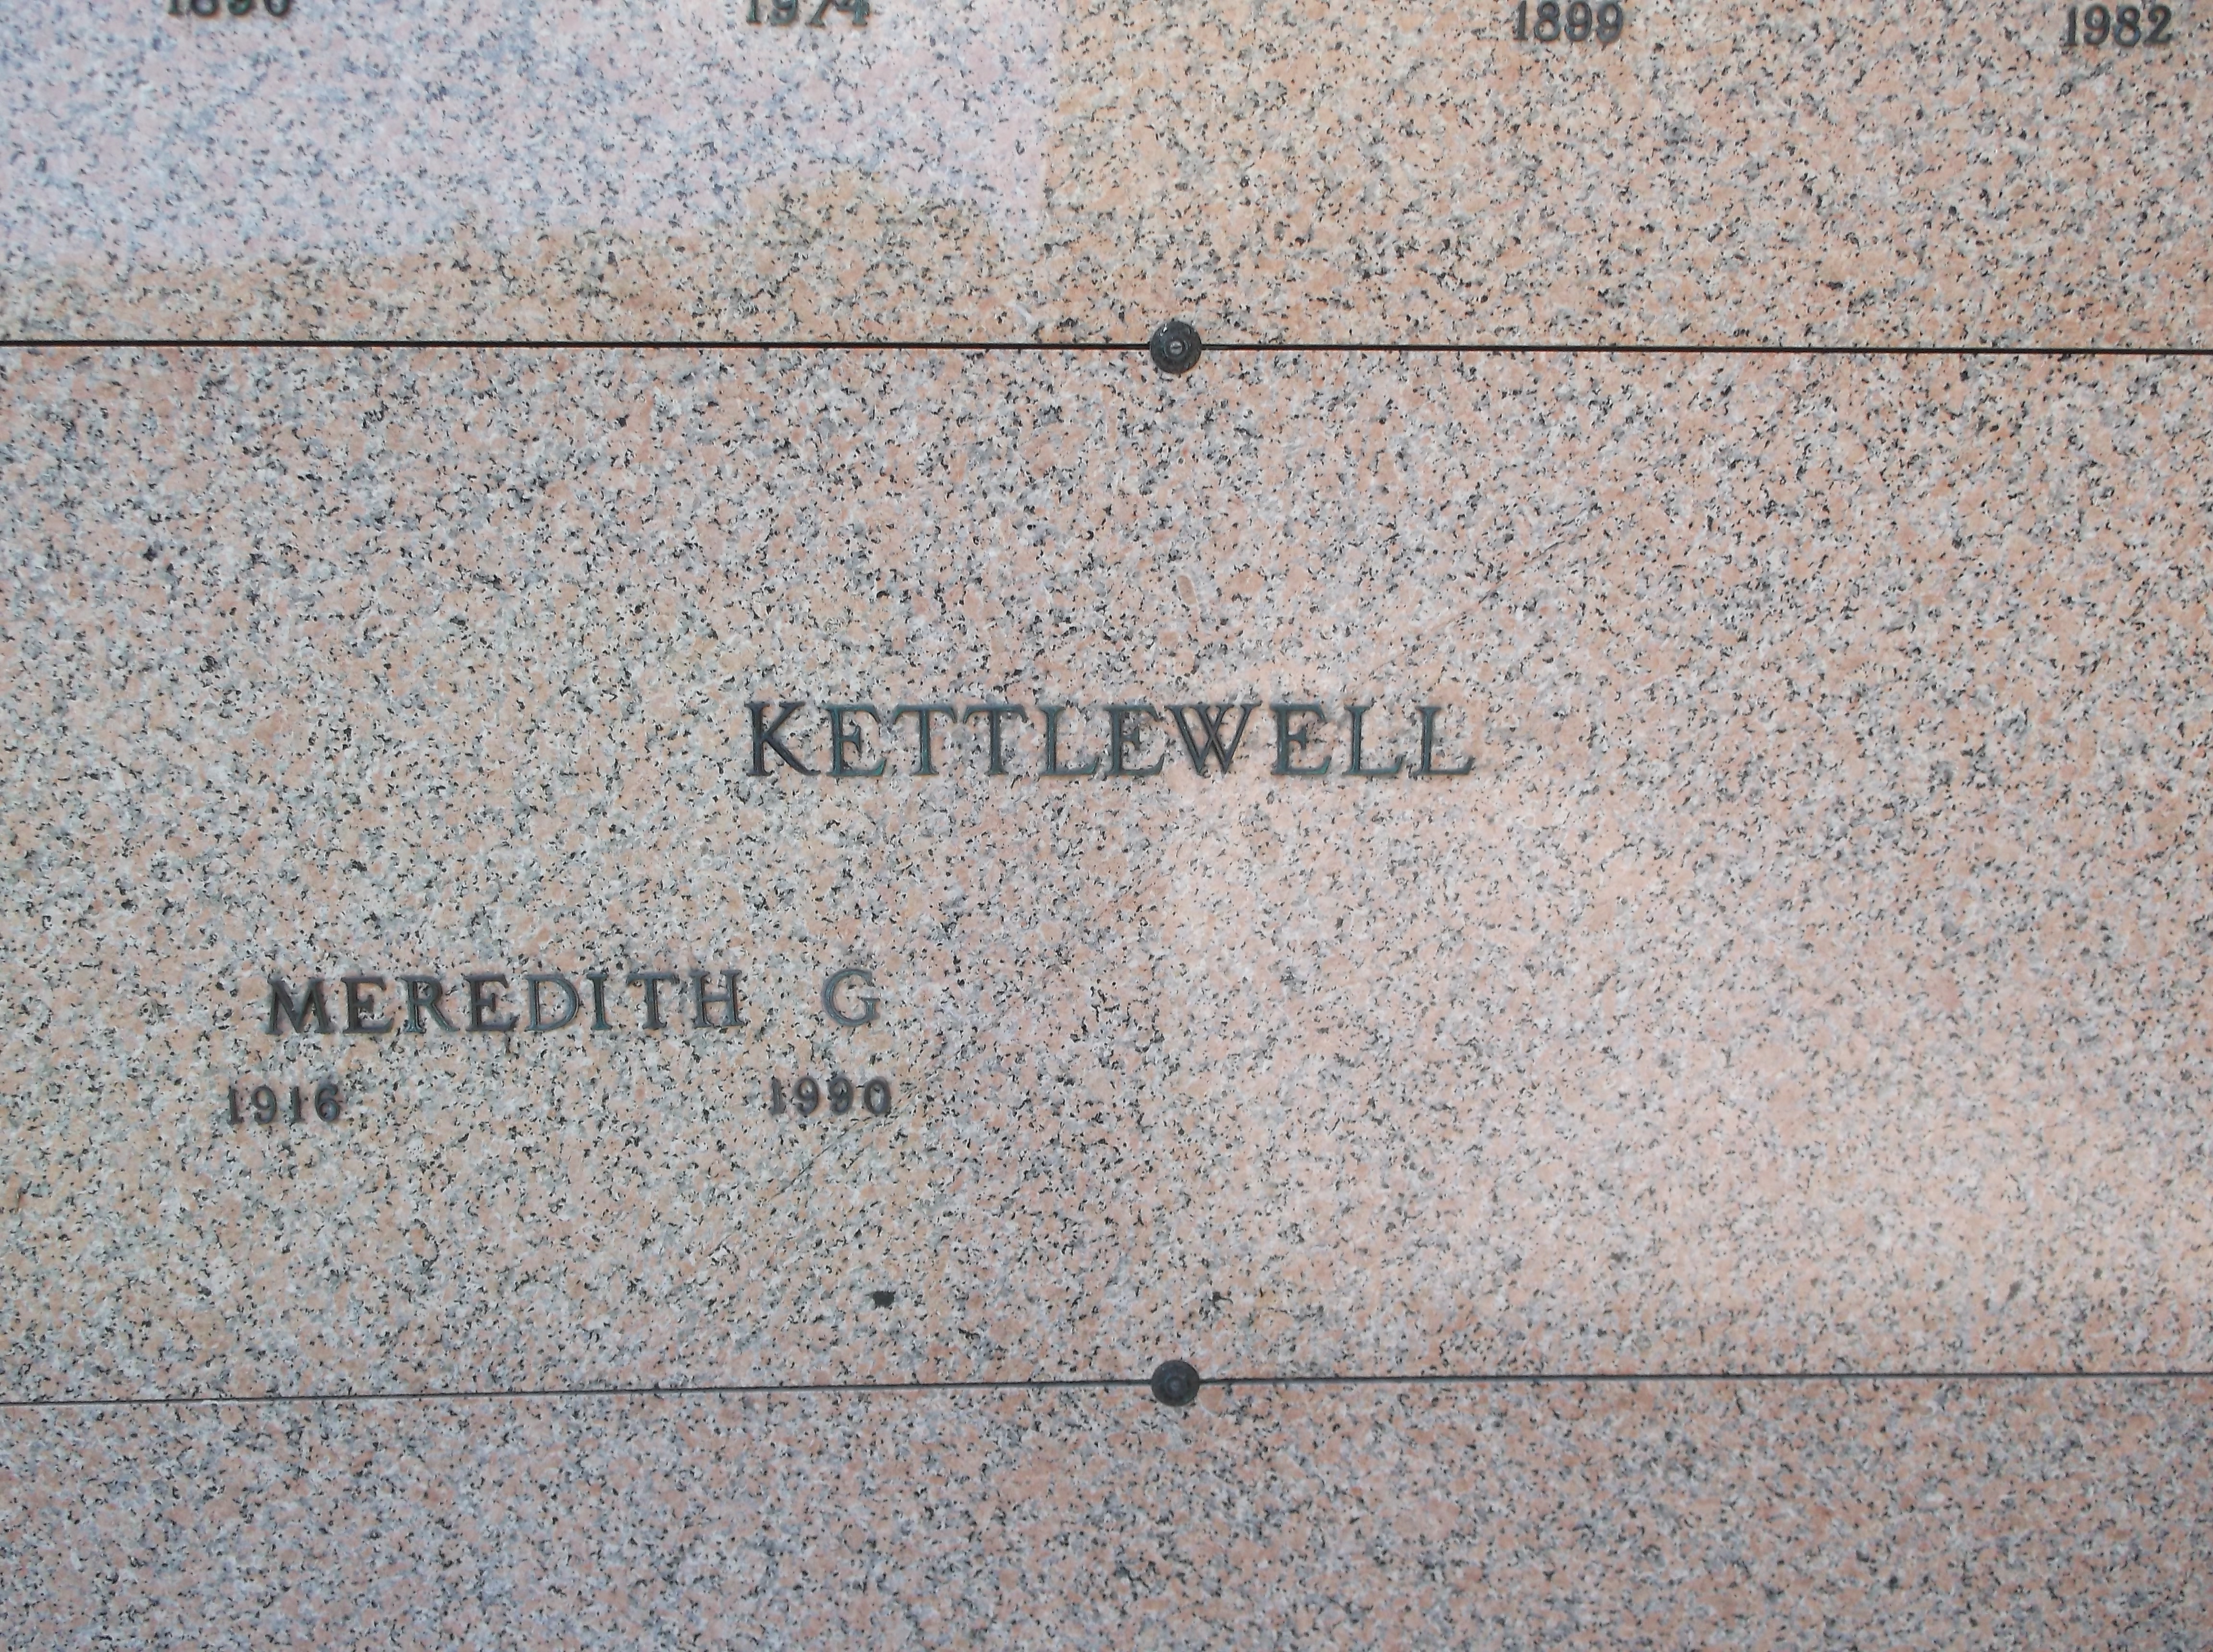 Meredith G Kettlewell